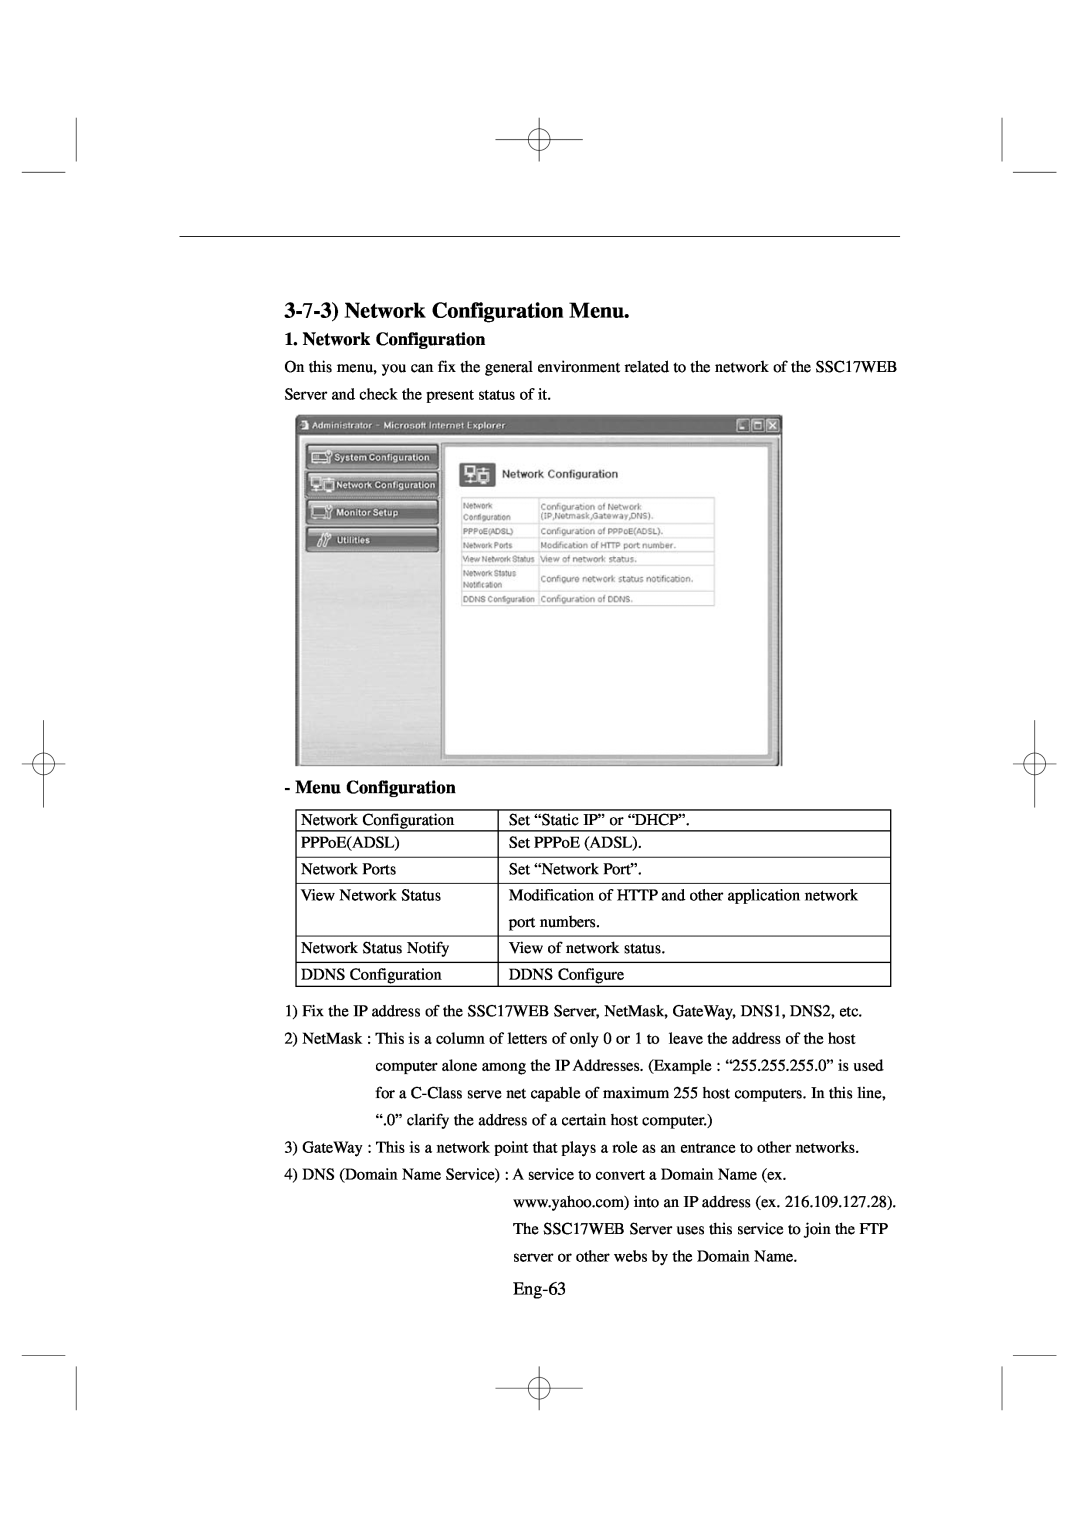 Samsung SSC17WEB manual 3-7-3Network Configuration Menu, Menu Configuration 